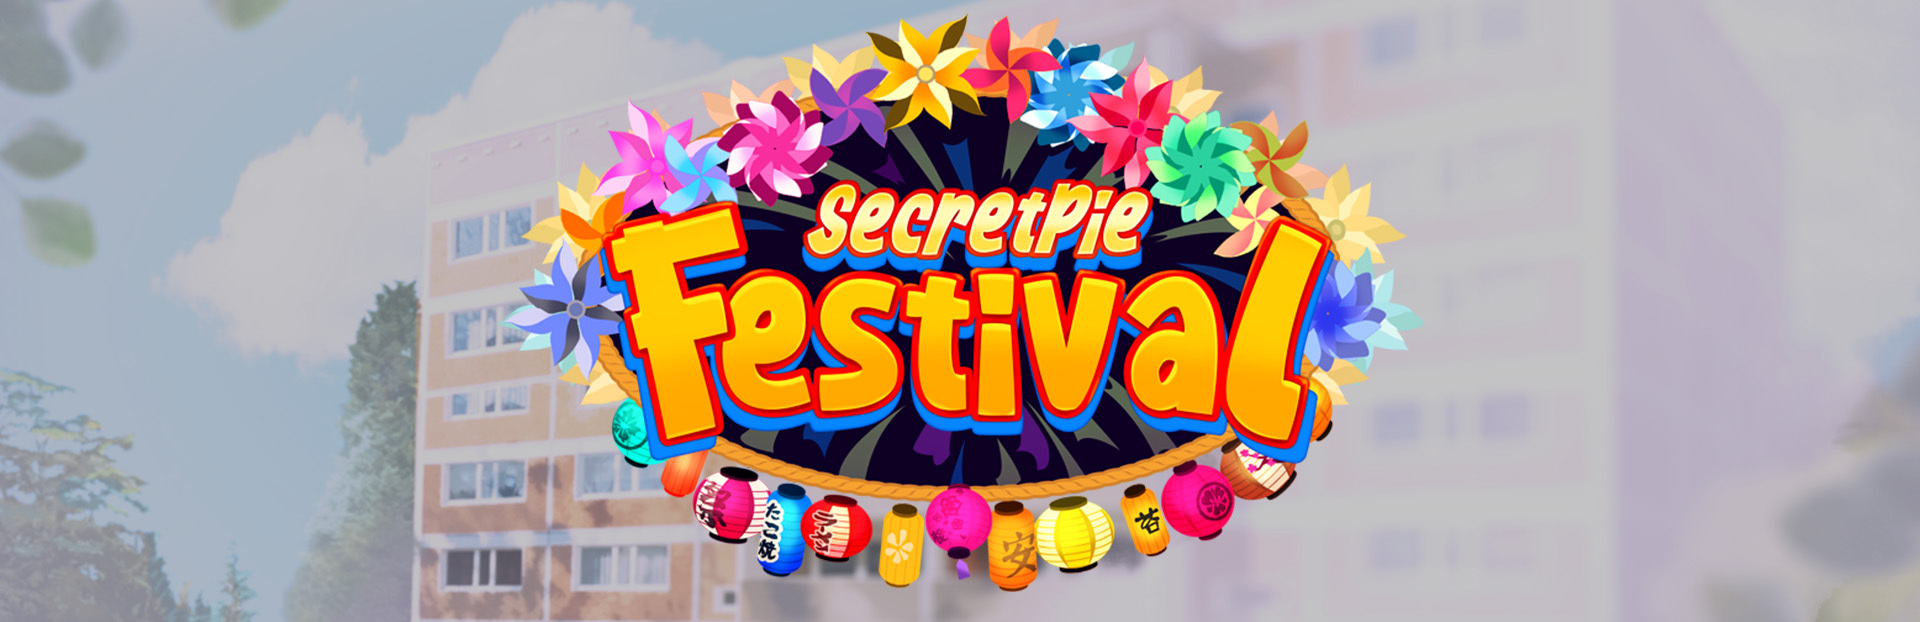 Secret pie festival